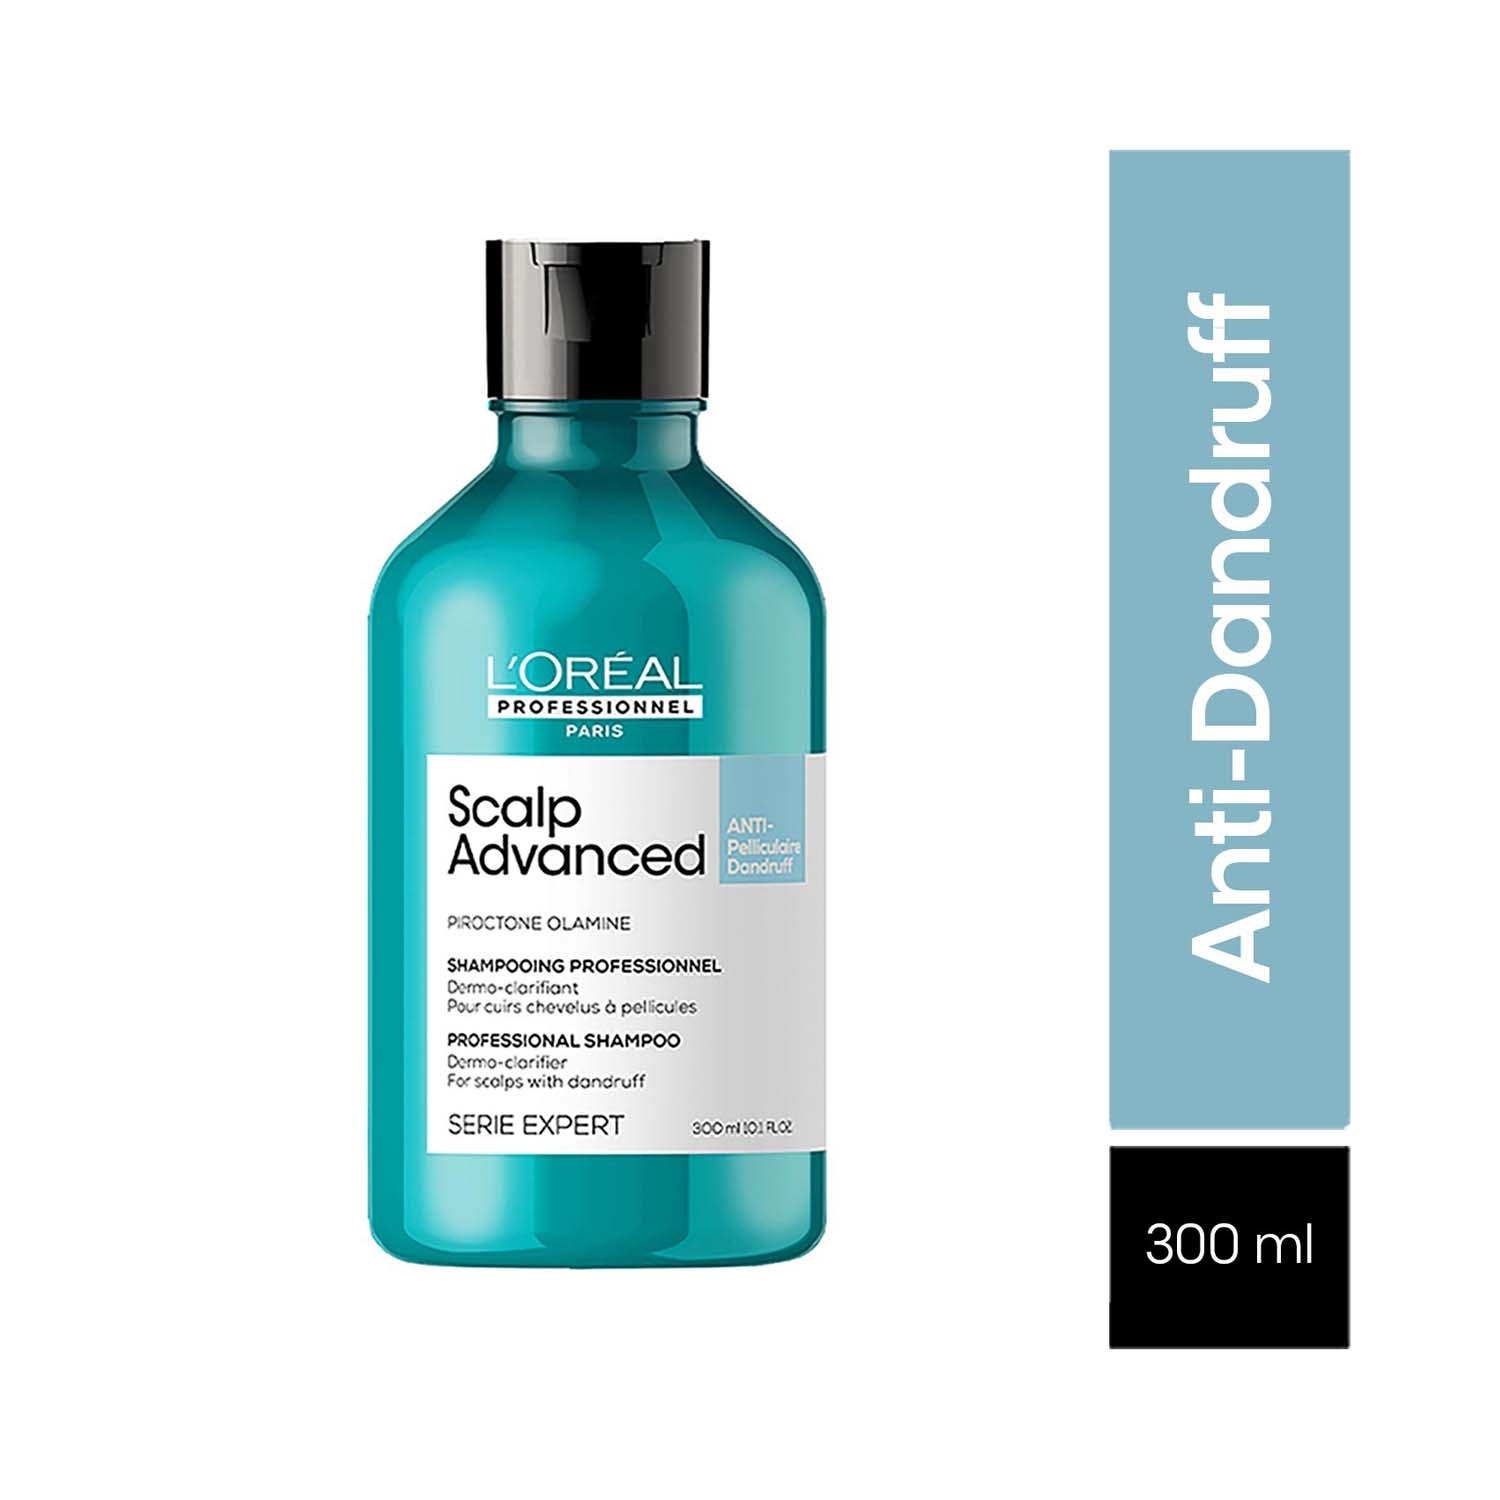 L'Oreal Professionnel | L'Oreal Professionnel Scalp Advanced Anti-Dandruff Dermo-Clarifier Shampoo (300ml)